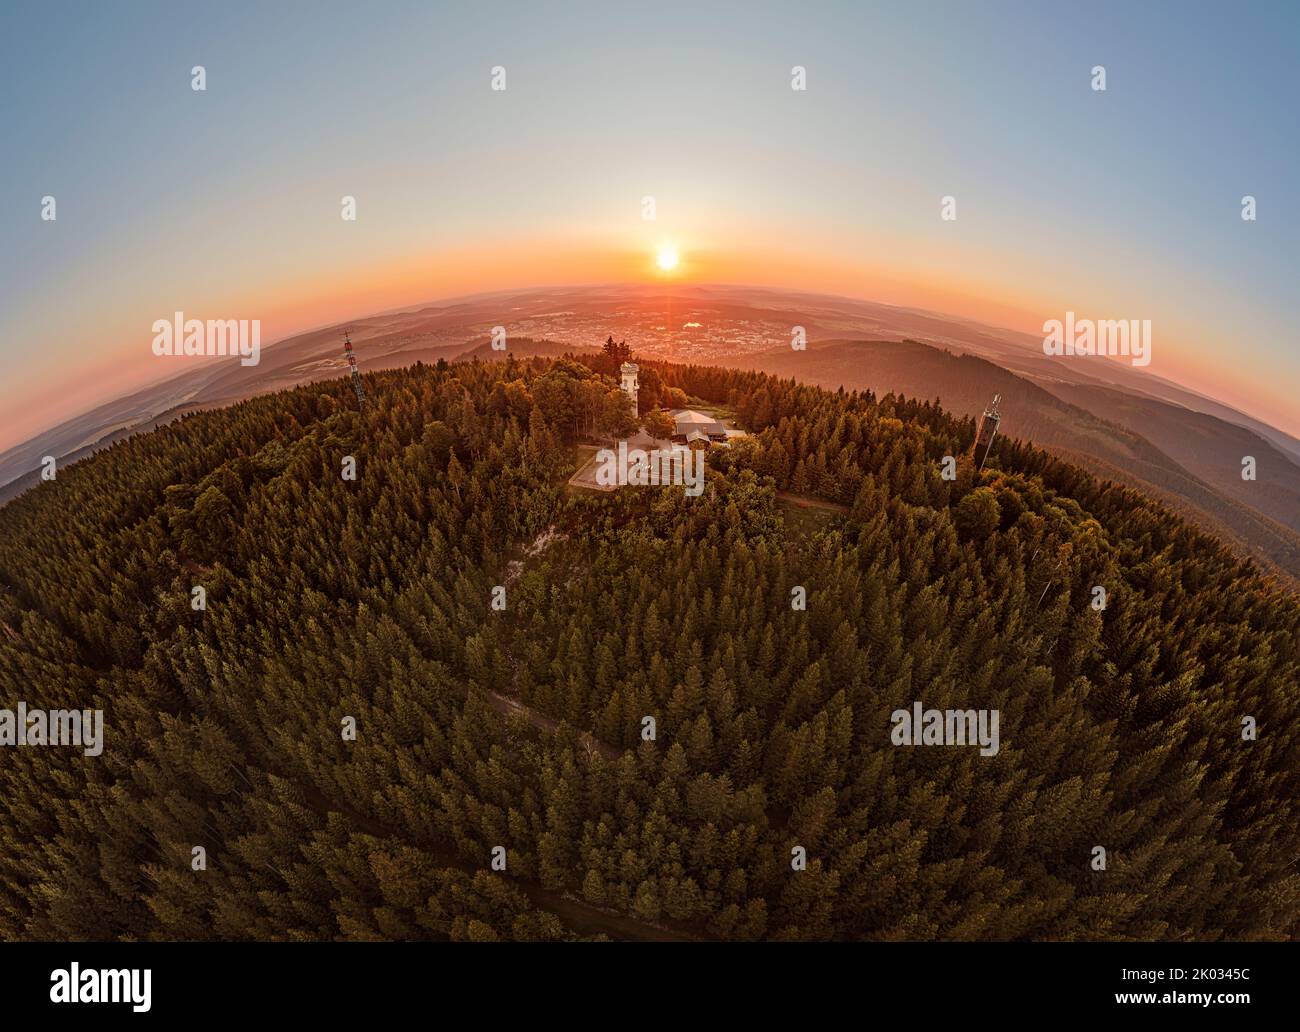 Germany, Thuringia, Ilmenau, Kickelhahn, observation tower, Telekom tower, sunrise, forest, mountains, hemisphere panorama Stock Photo